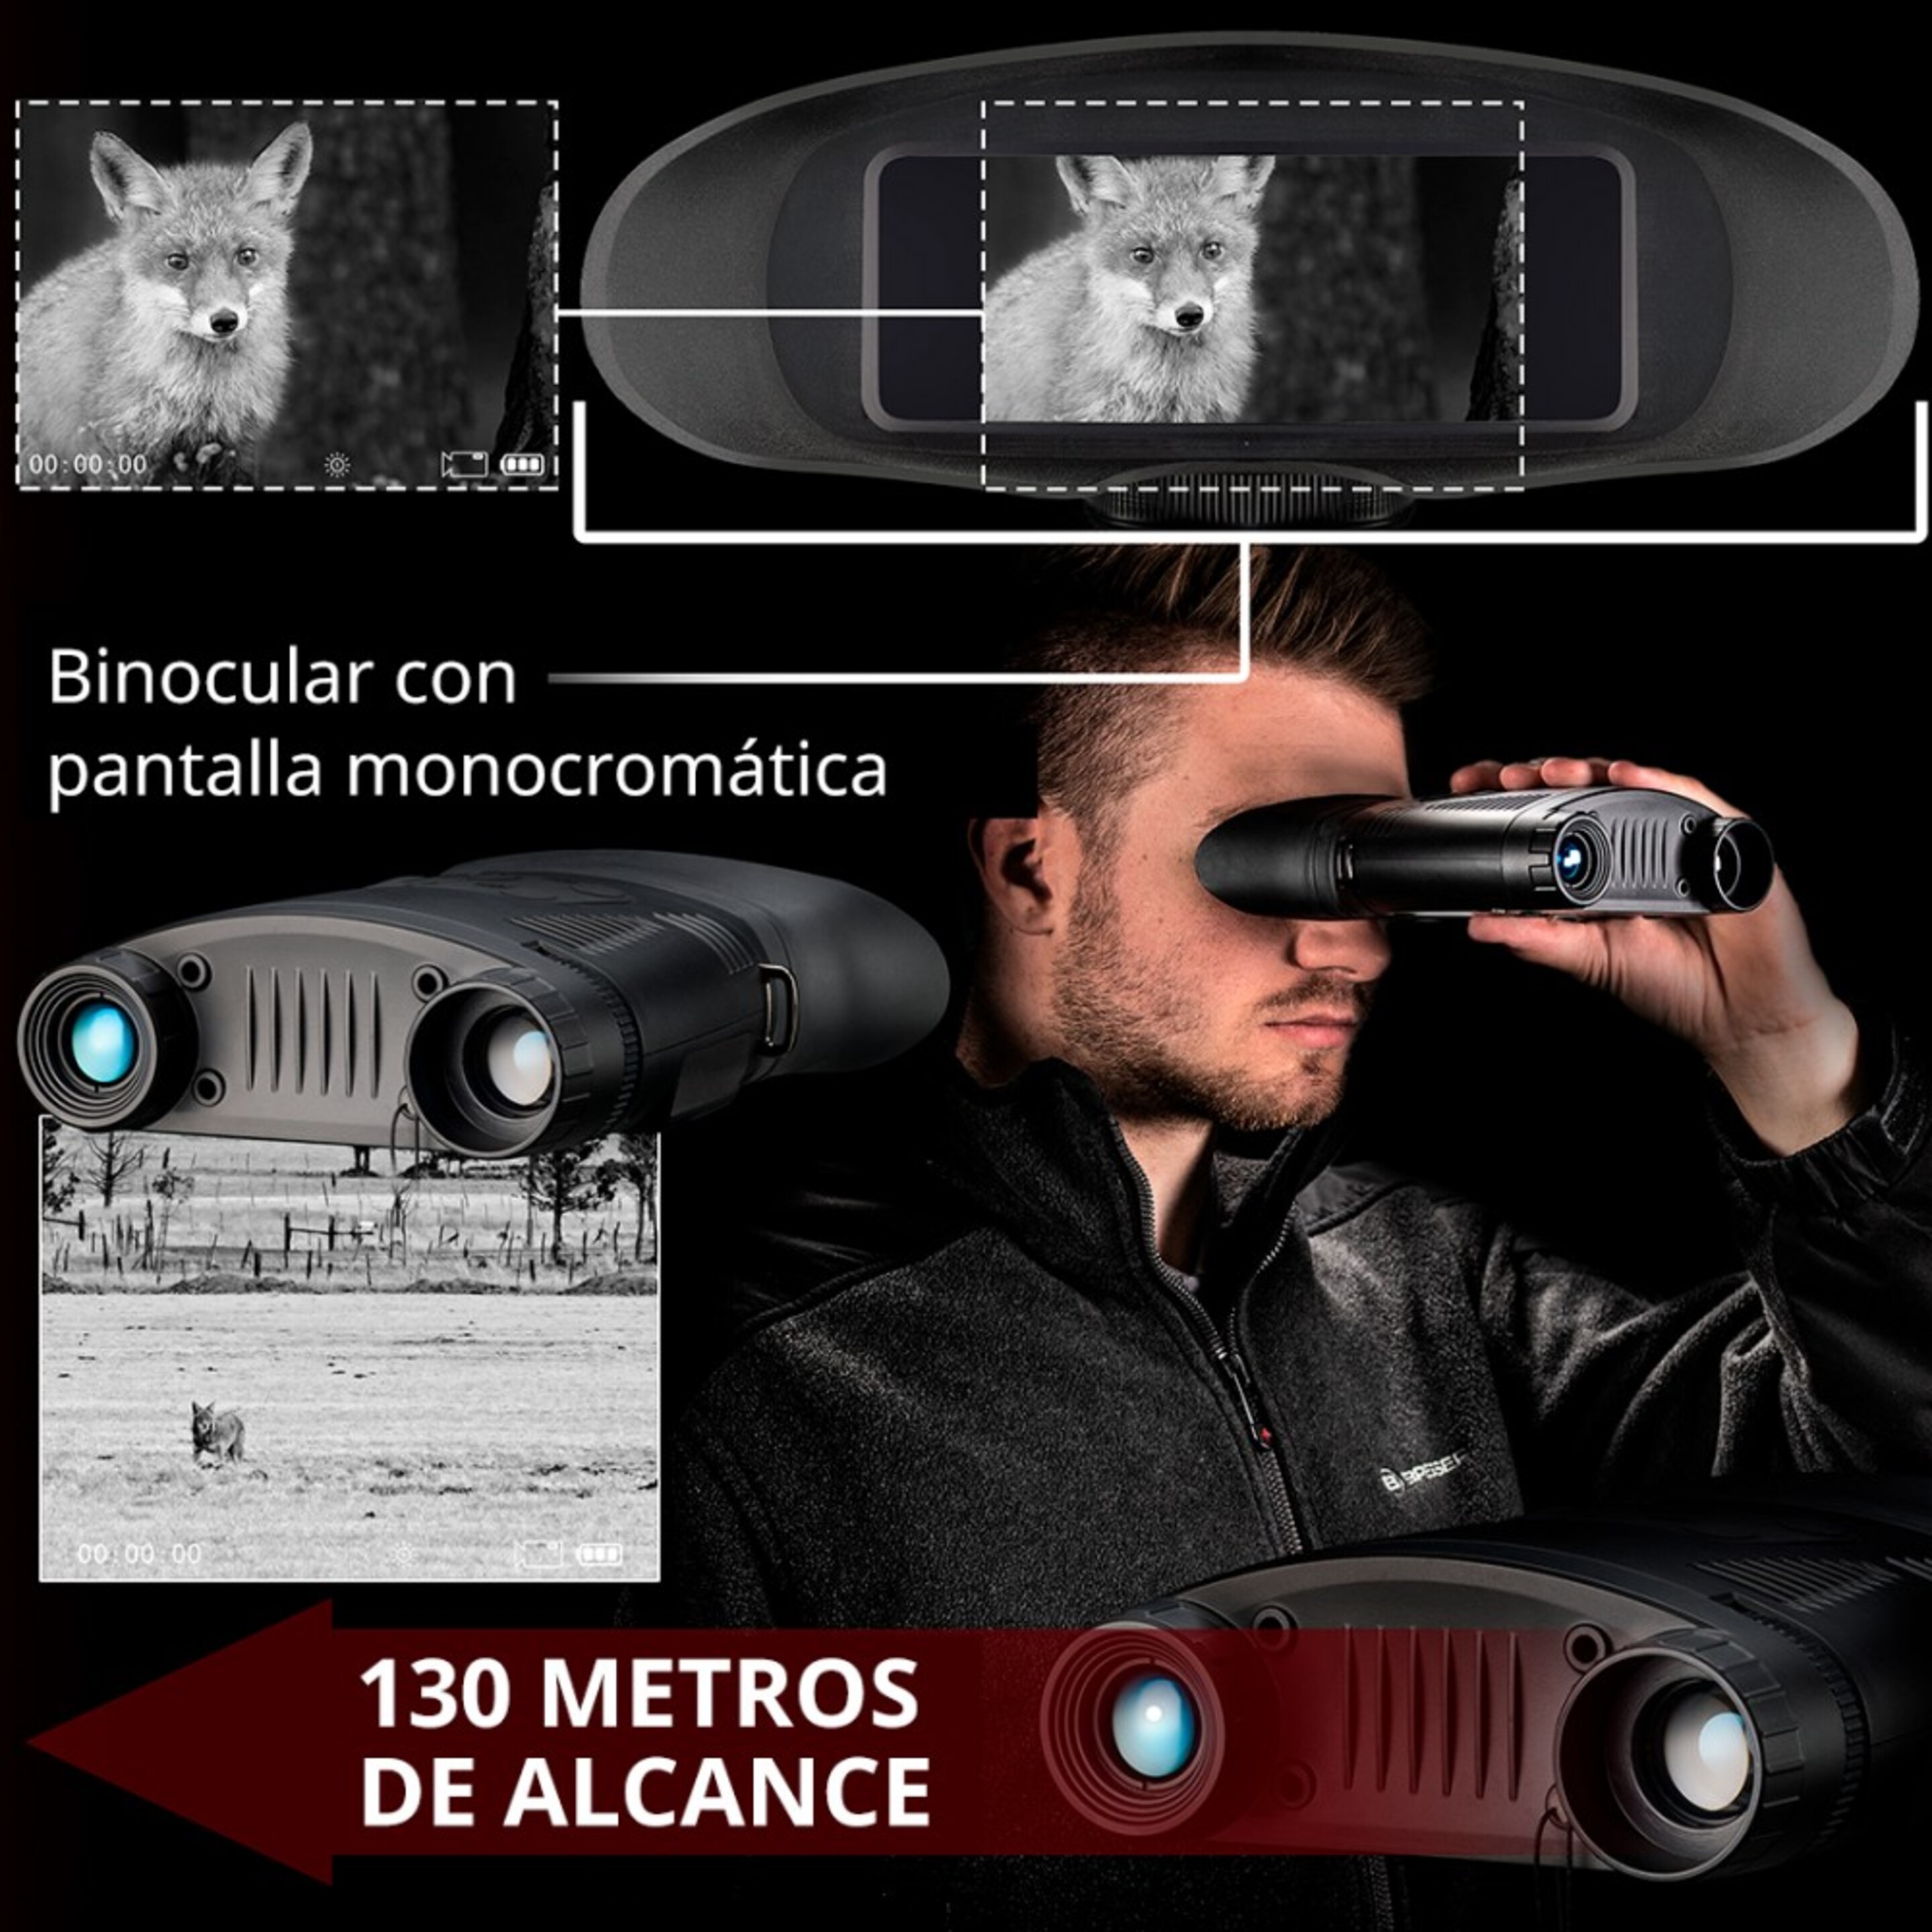 Visão Nocturna Digital Binocular 3,5x M National Geographic Monochrome Capture